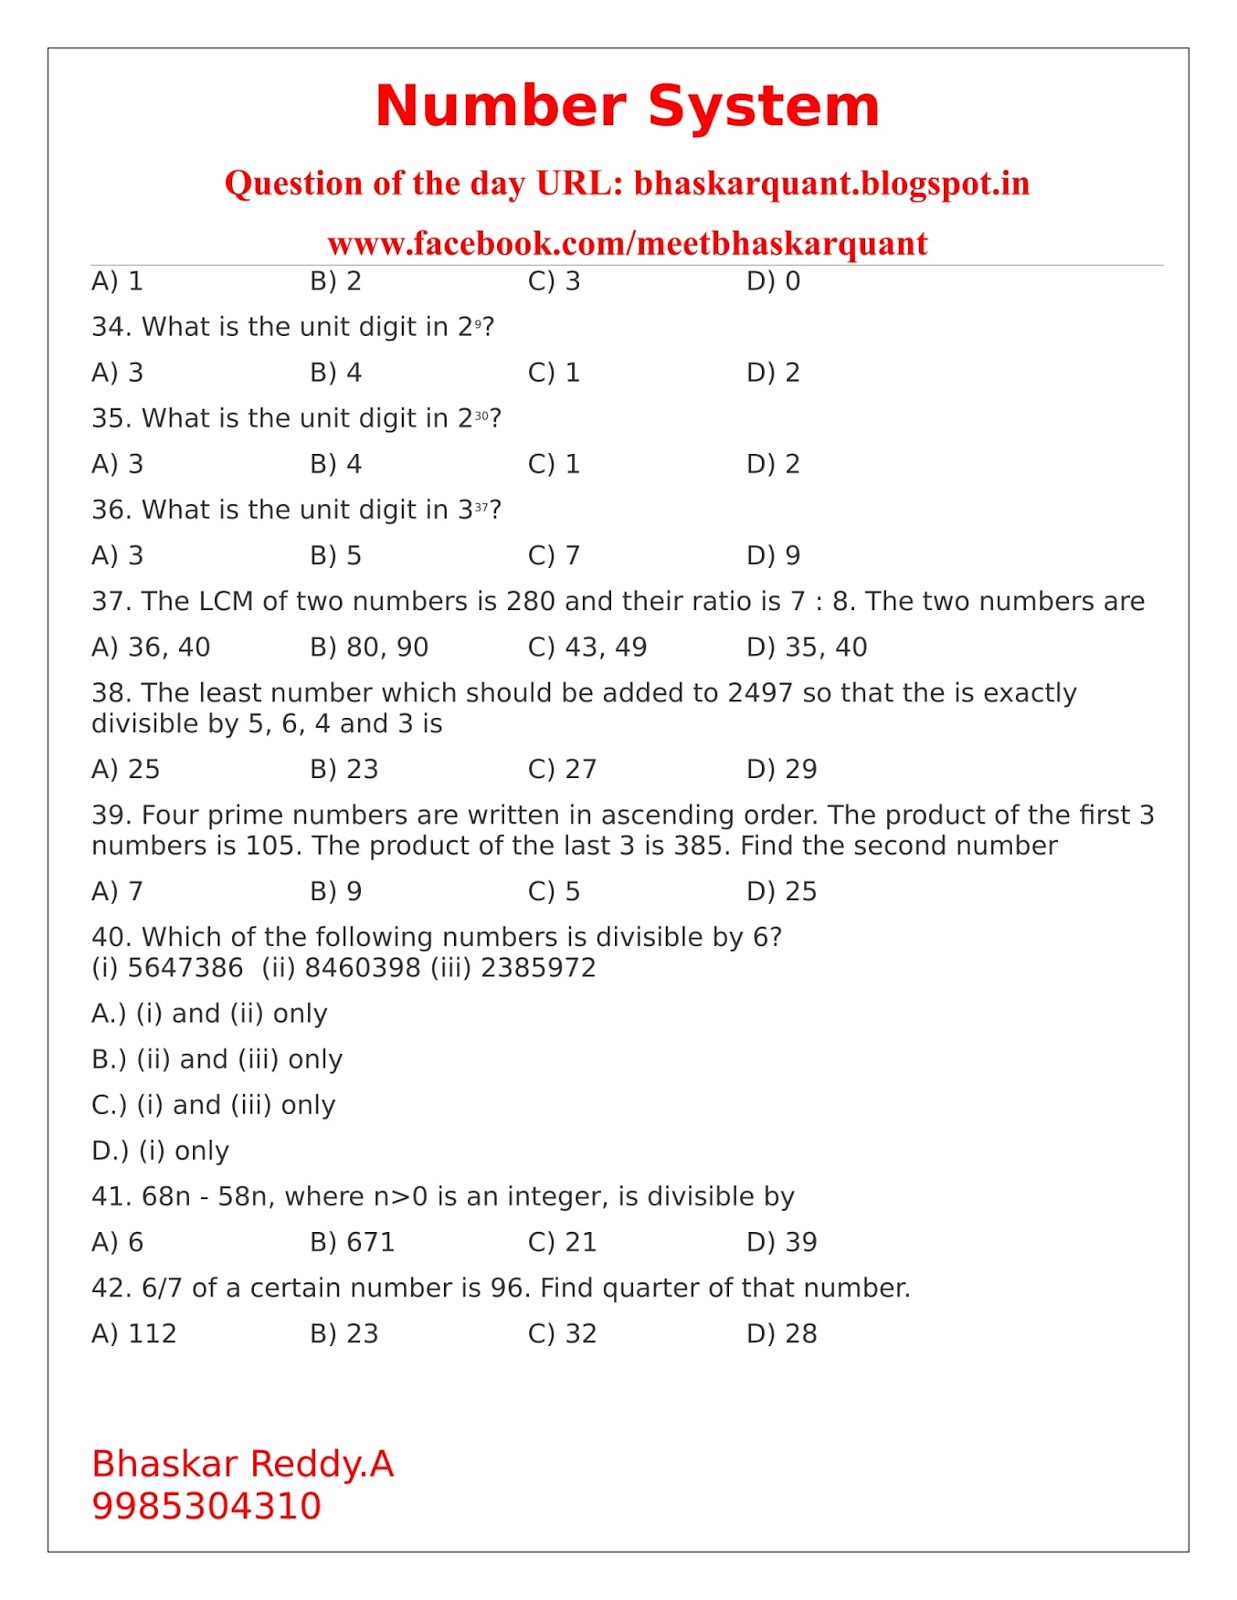 bhaskar-reddy-ankireddypalli-aptitude-classes-number-system-sample-questions